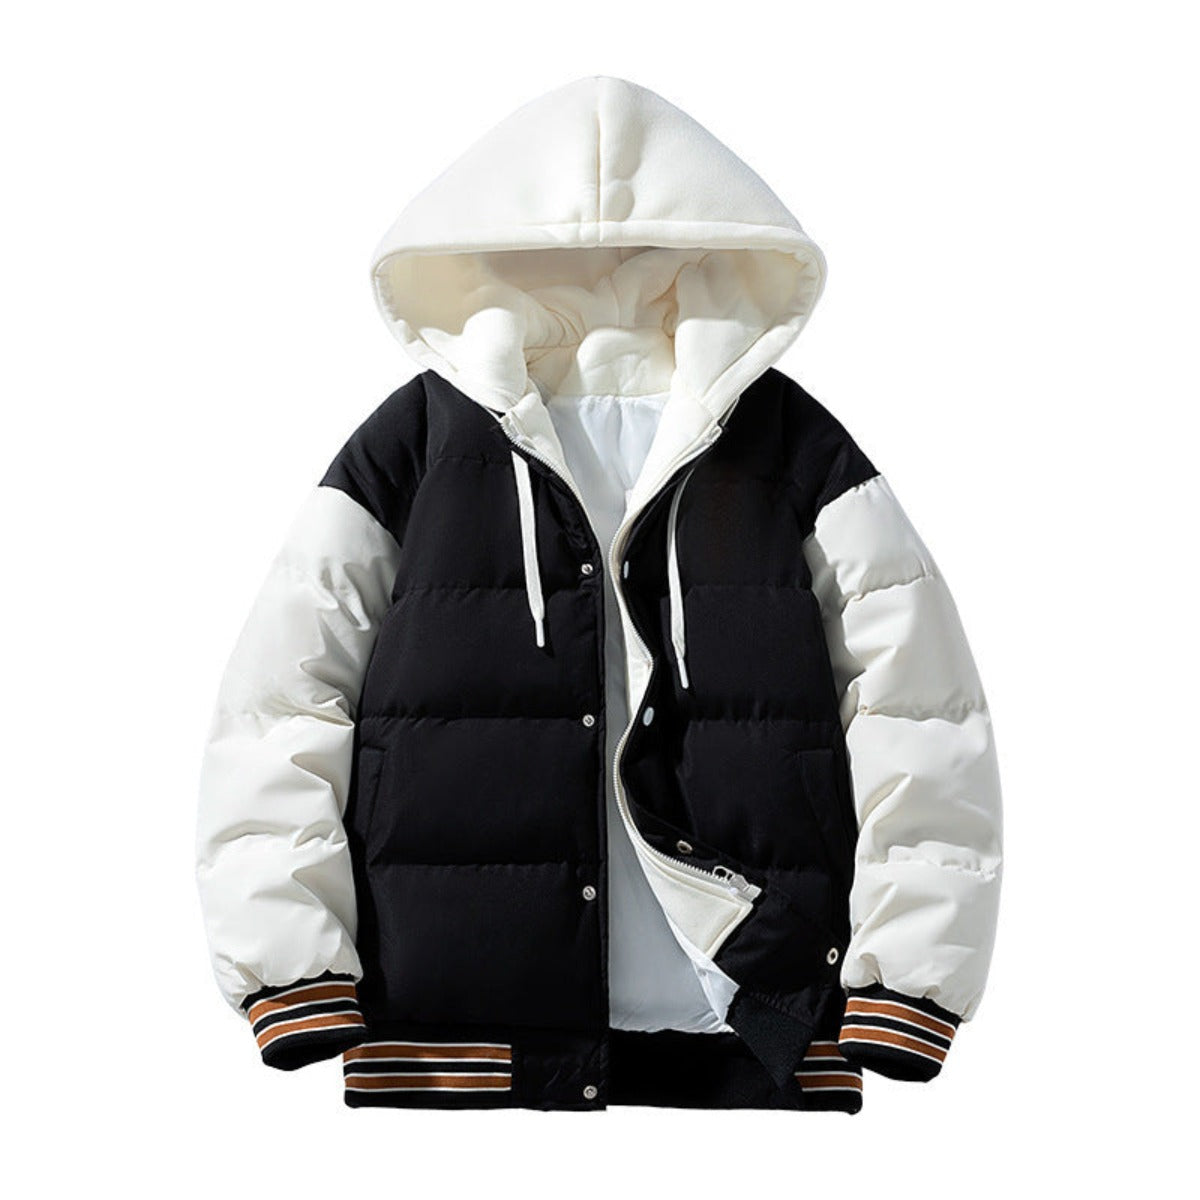 Warm Winter Embrace: Cozy Down Jacket with Detachable Hood and Faux Fur Trim LA ROSE BEAUTY